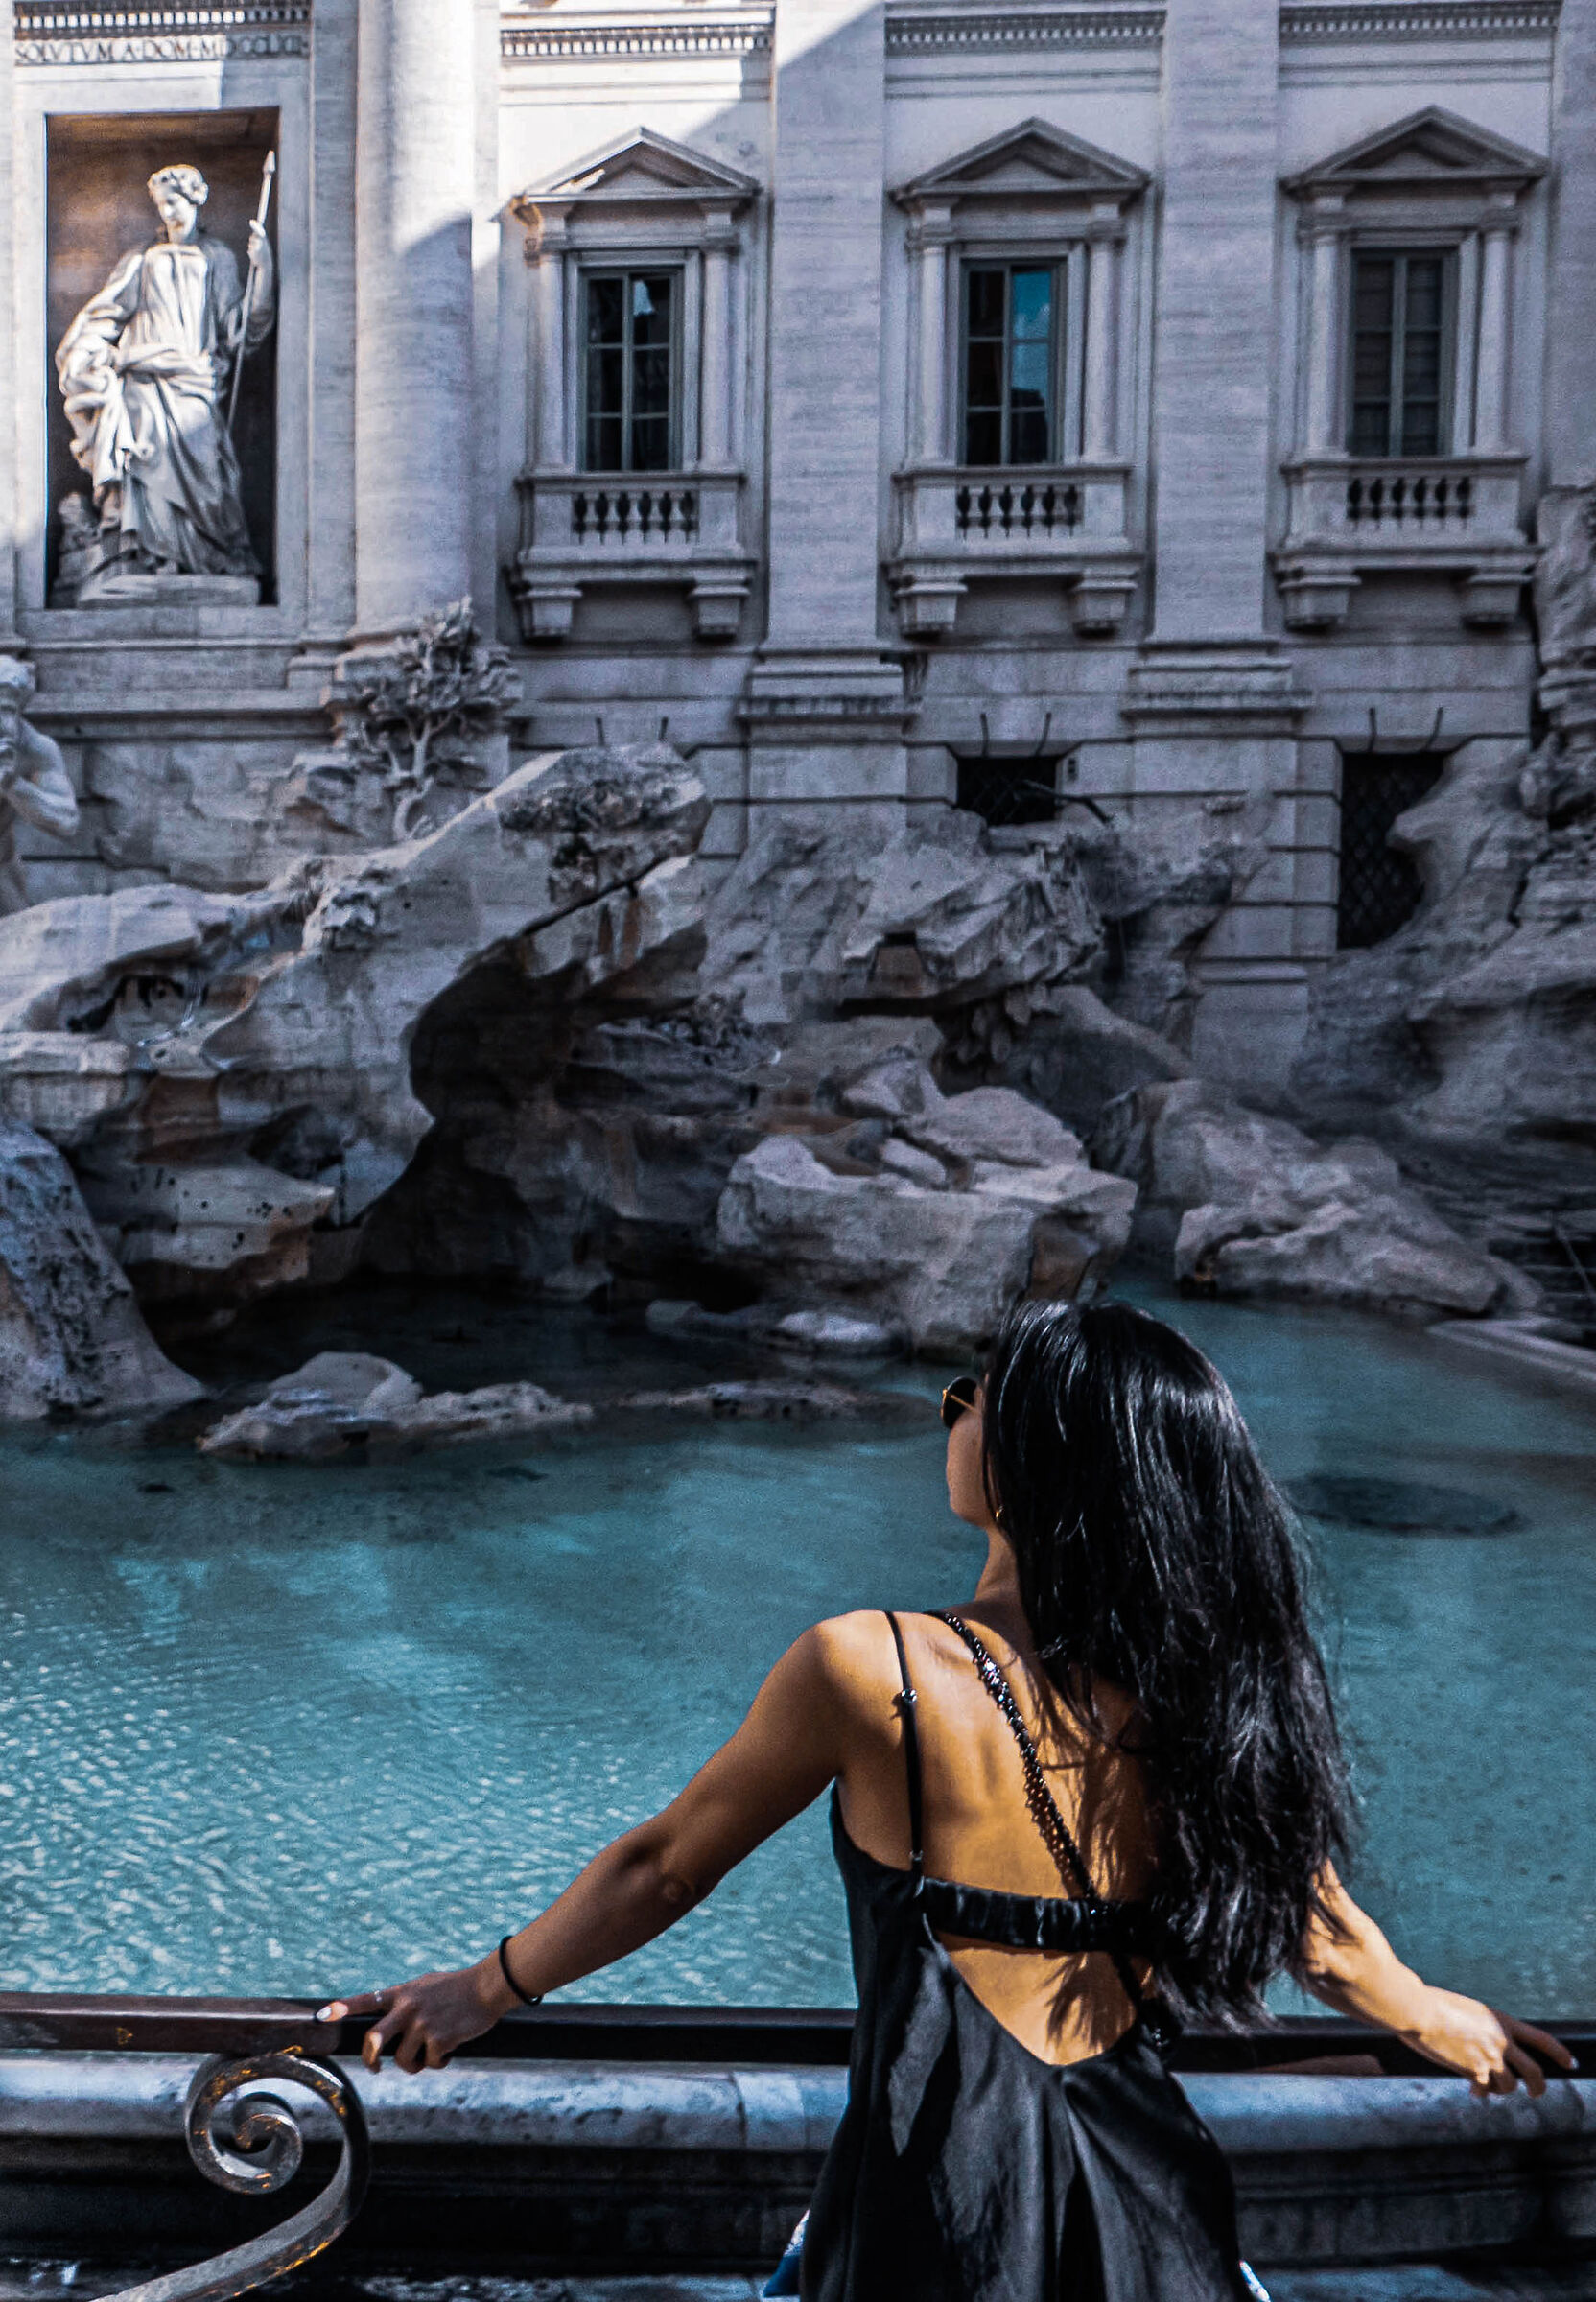 Tourist at the Trevi Fountain...